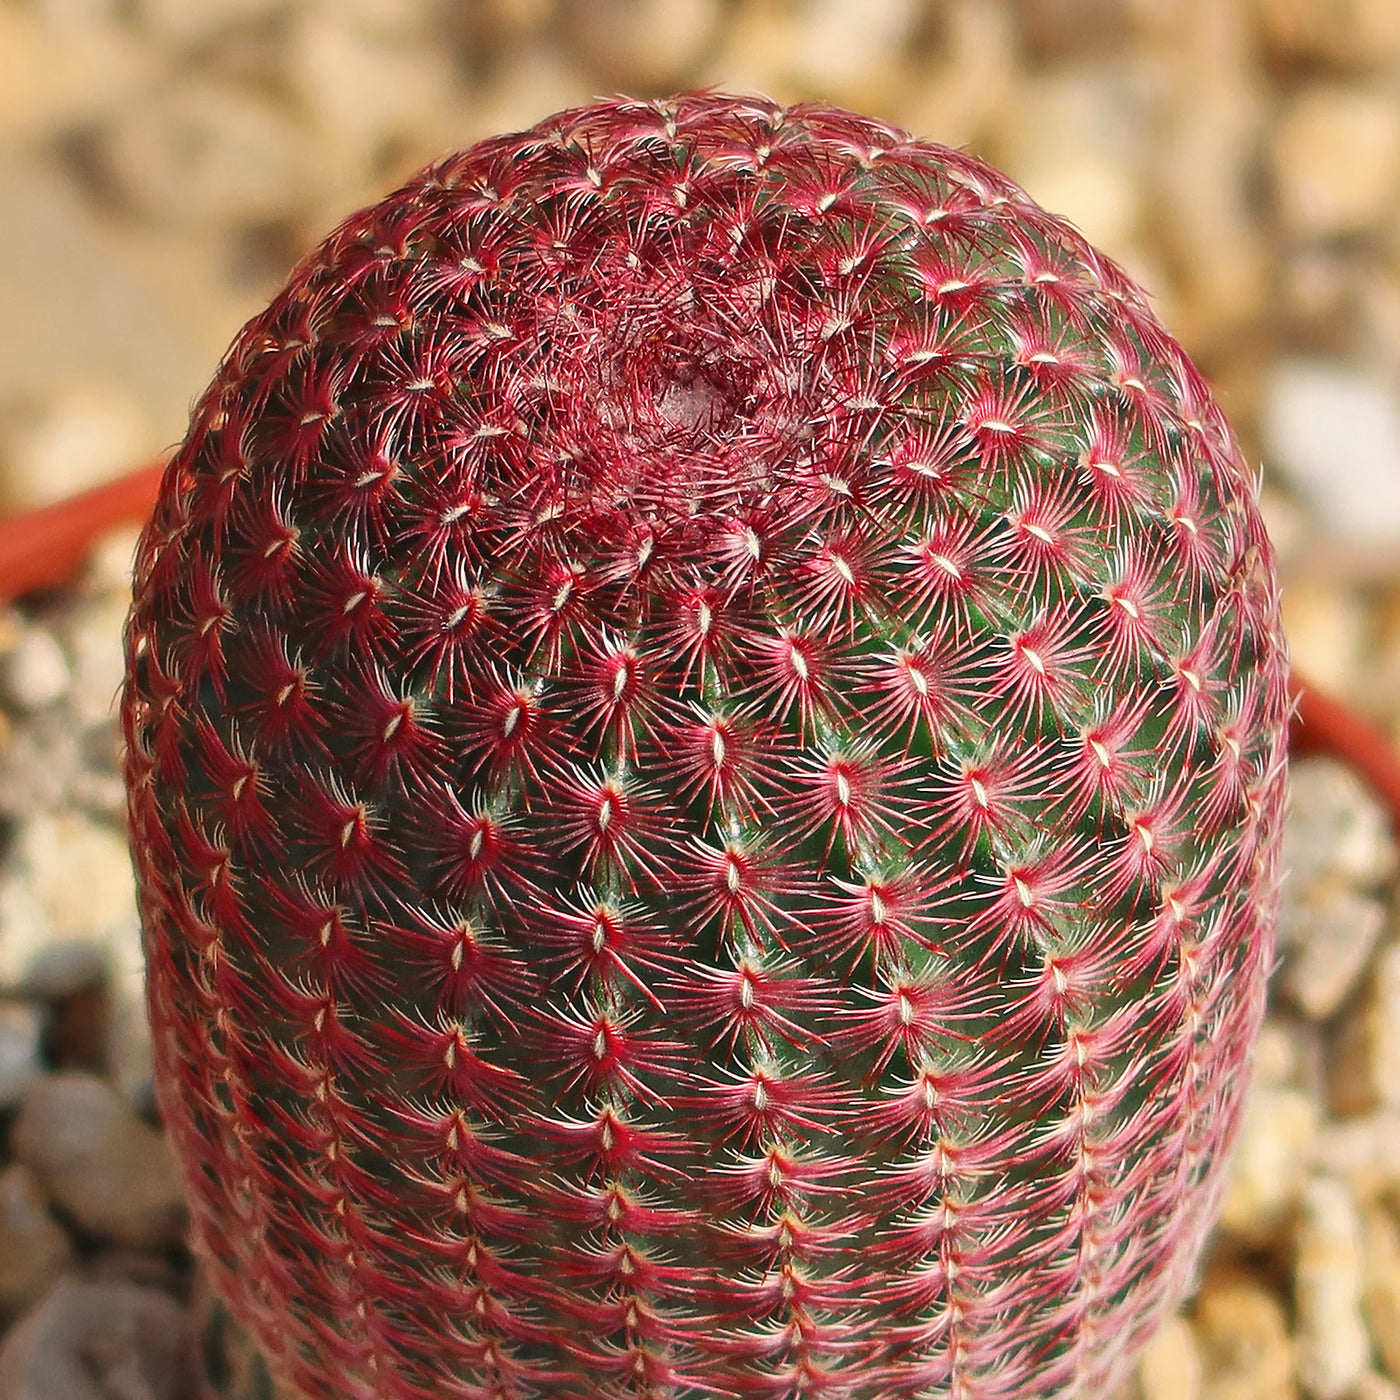 Echinocereus pectinatus rubispinus